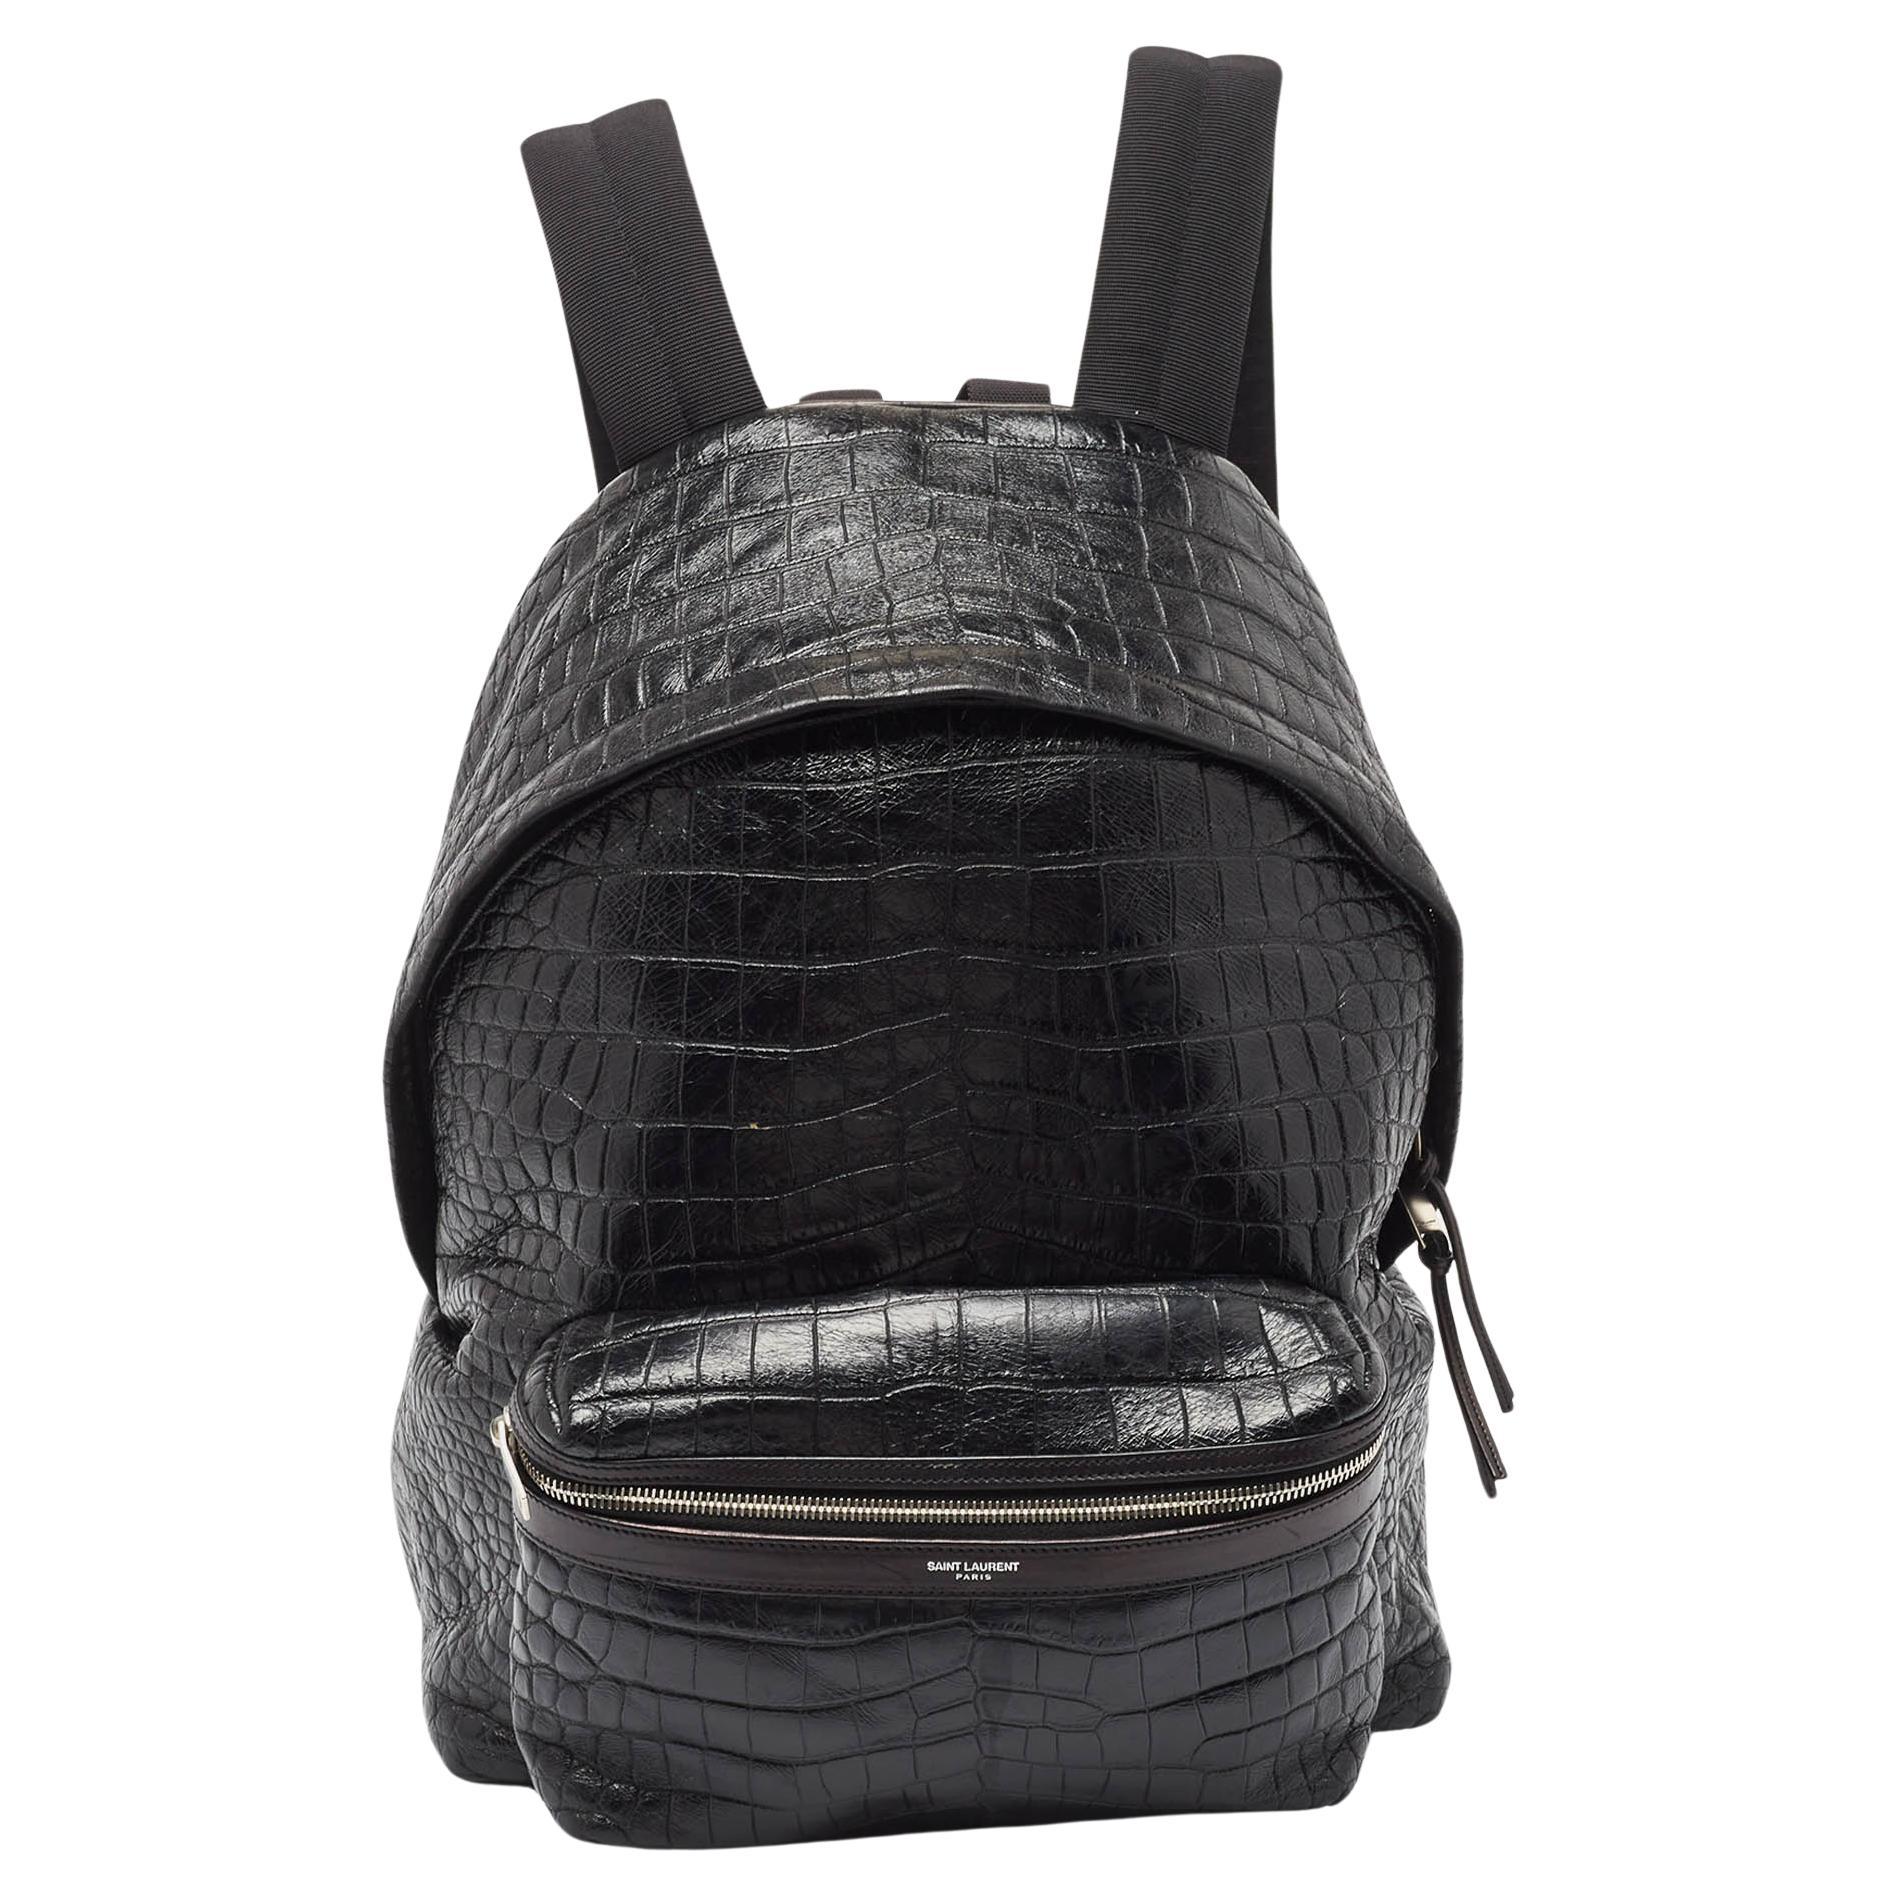  Saint Laurent Black Croc Embossed Leather City Backpack For Sale